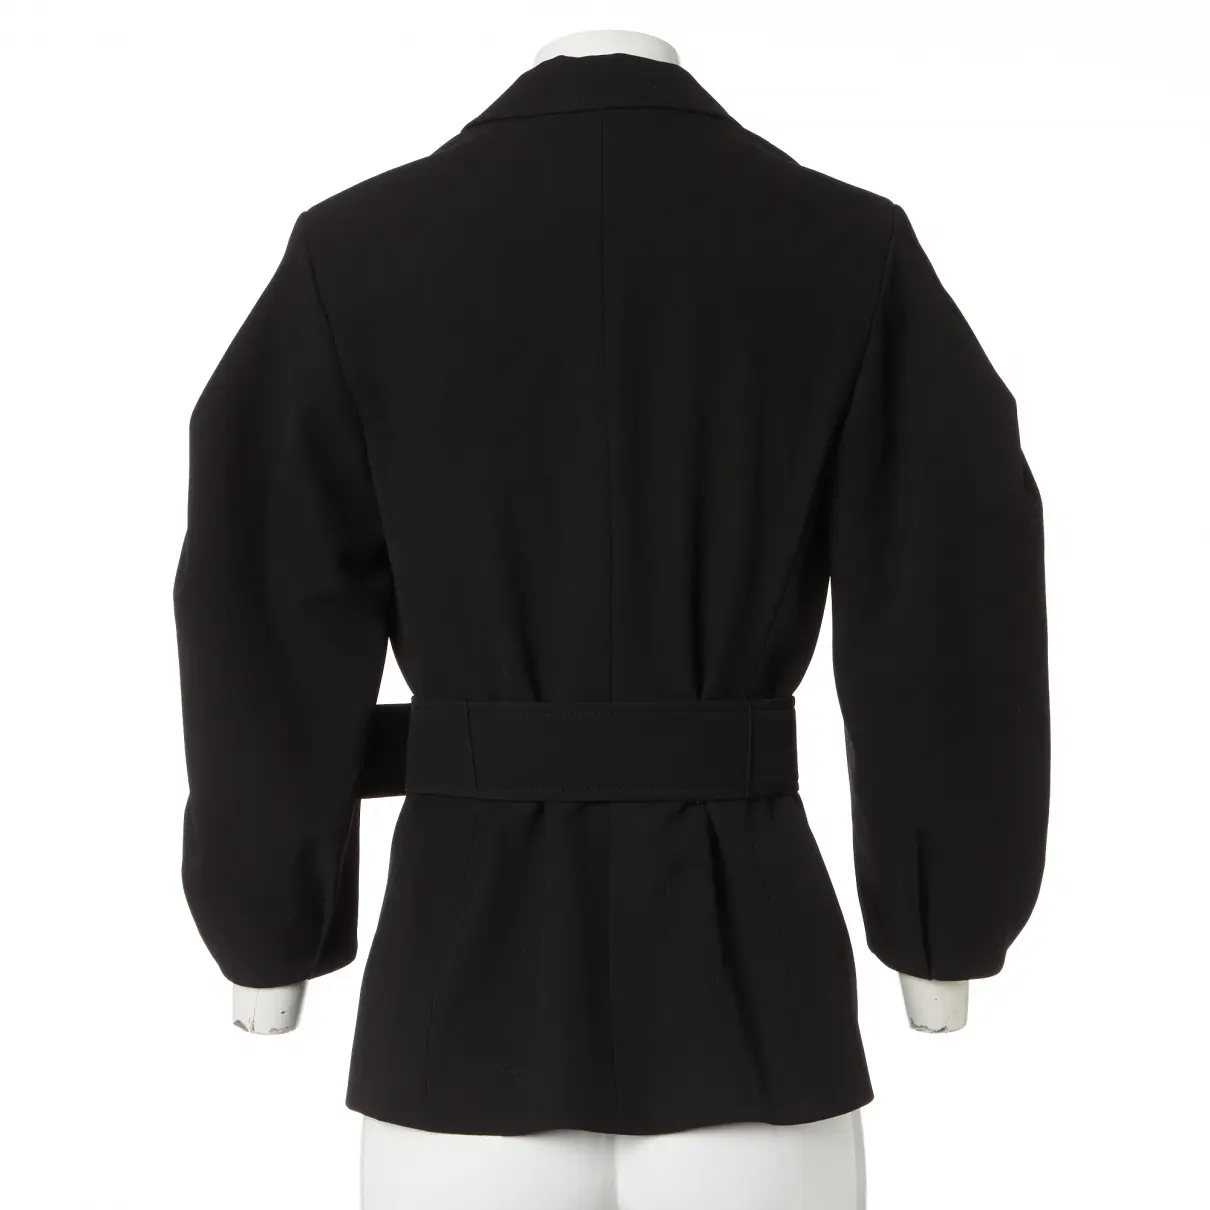 Buy Lala Berlin Black Polyester Jacket online